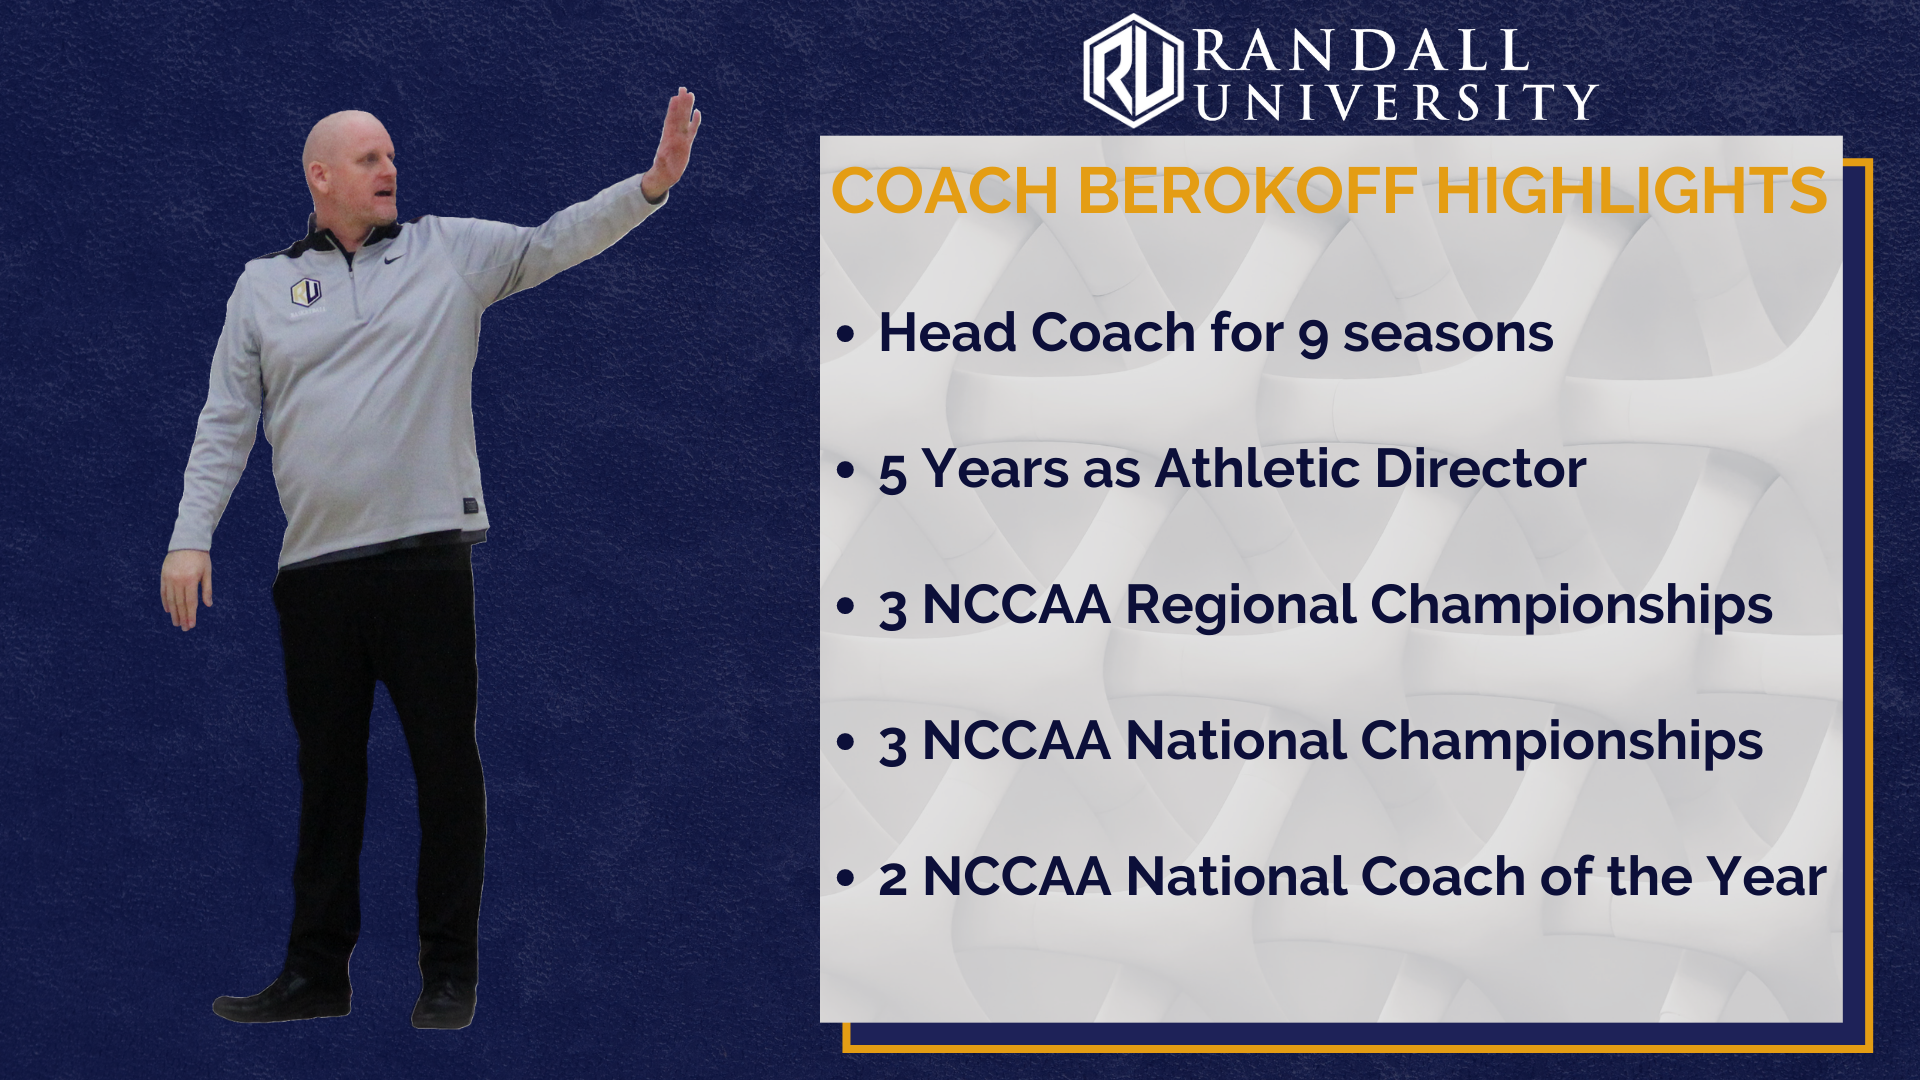 Coach Berokoff Highlights (1)